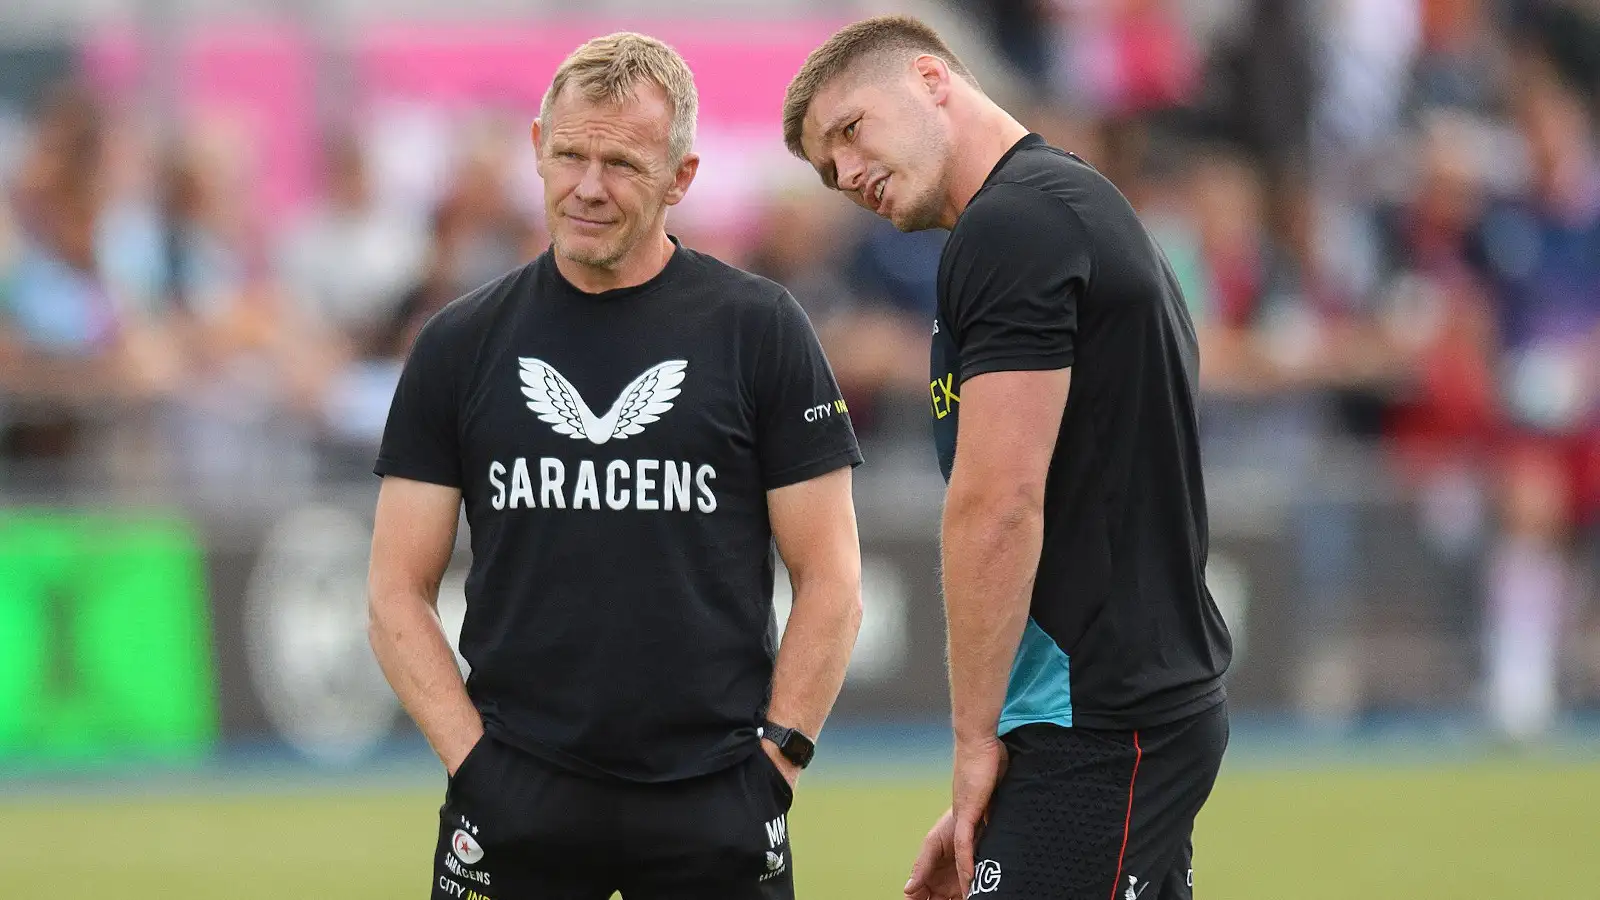 Saracens director of rugby Mark McCall alongside captain Owen Farrell.